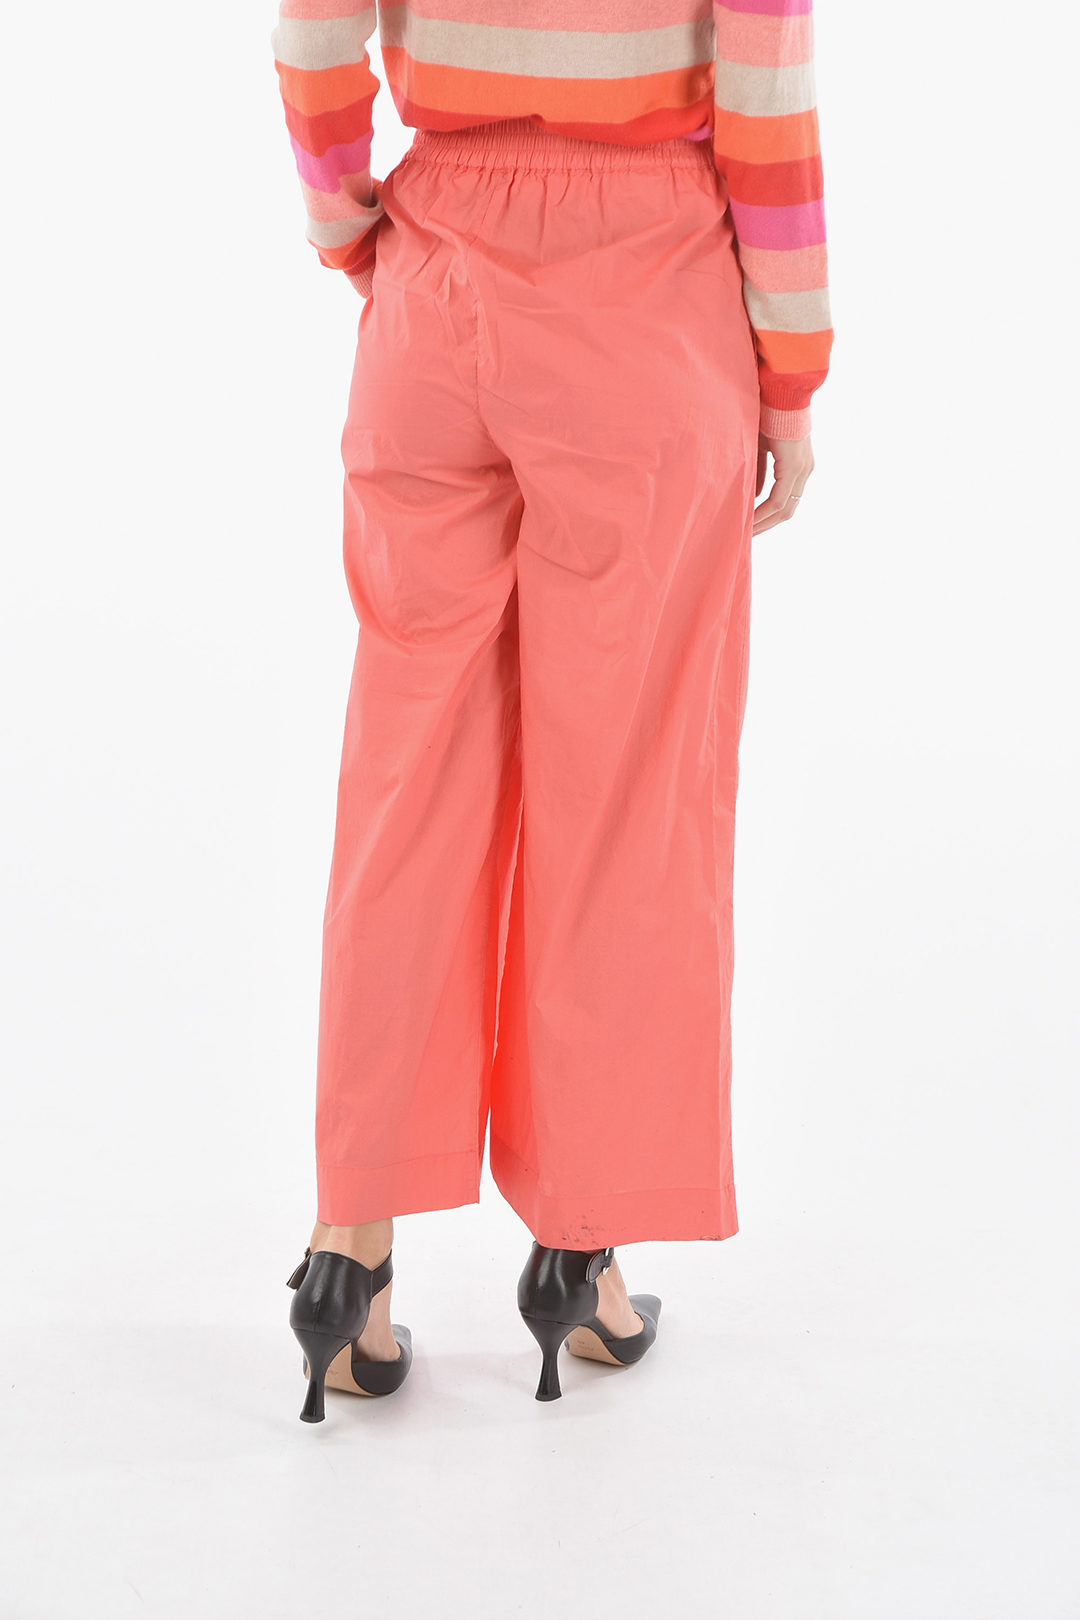 Woolrich High Waist Popeline Cotton Yoga Pants women - Glamood Outlet